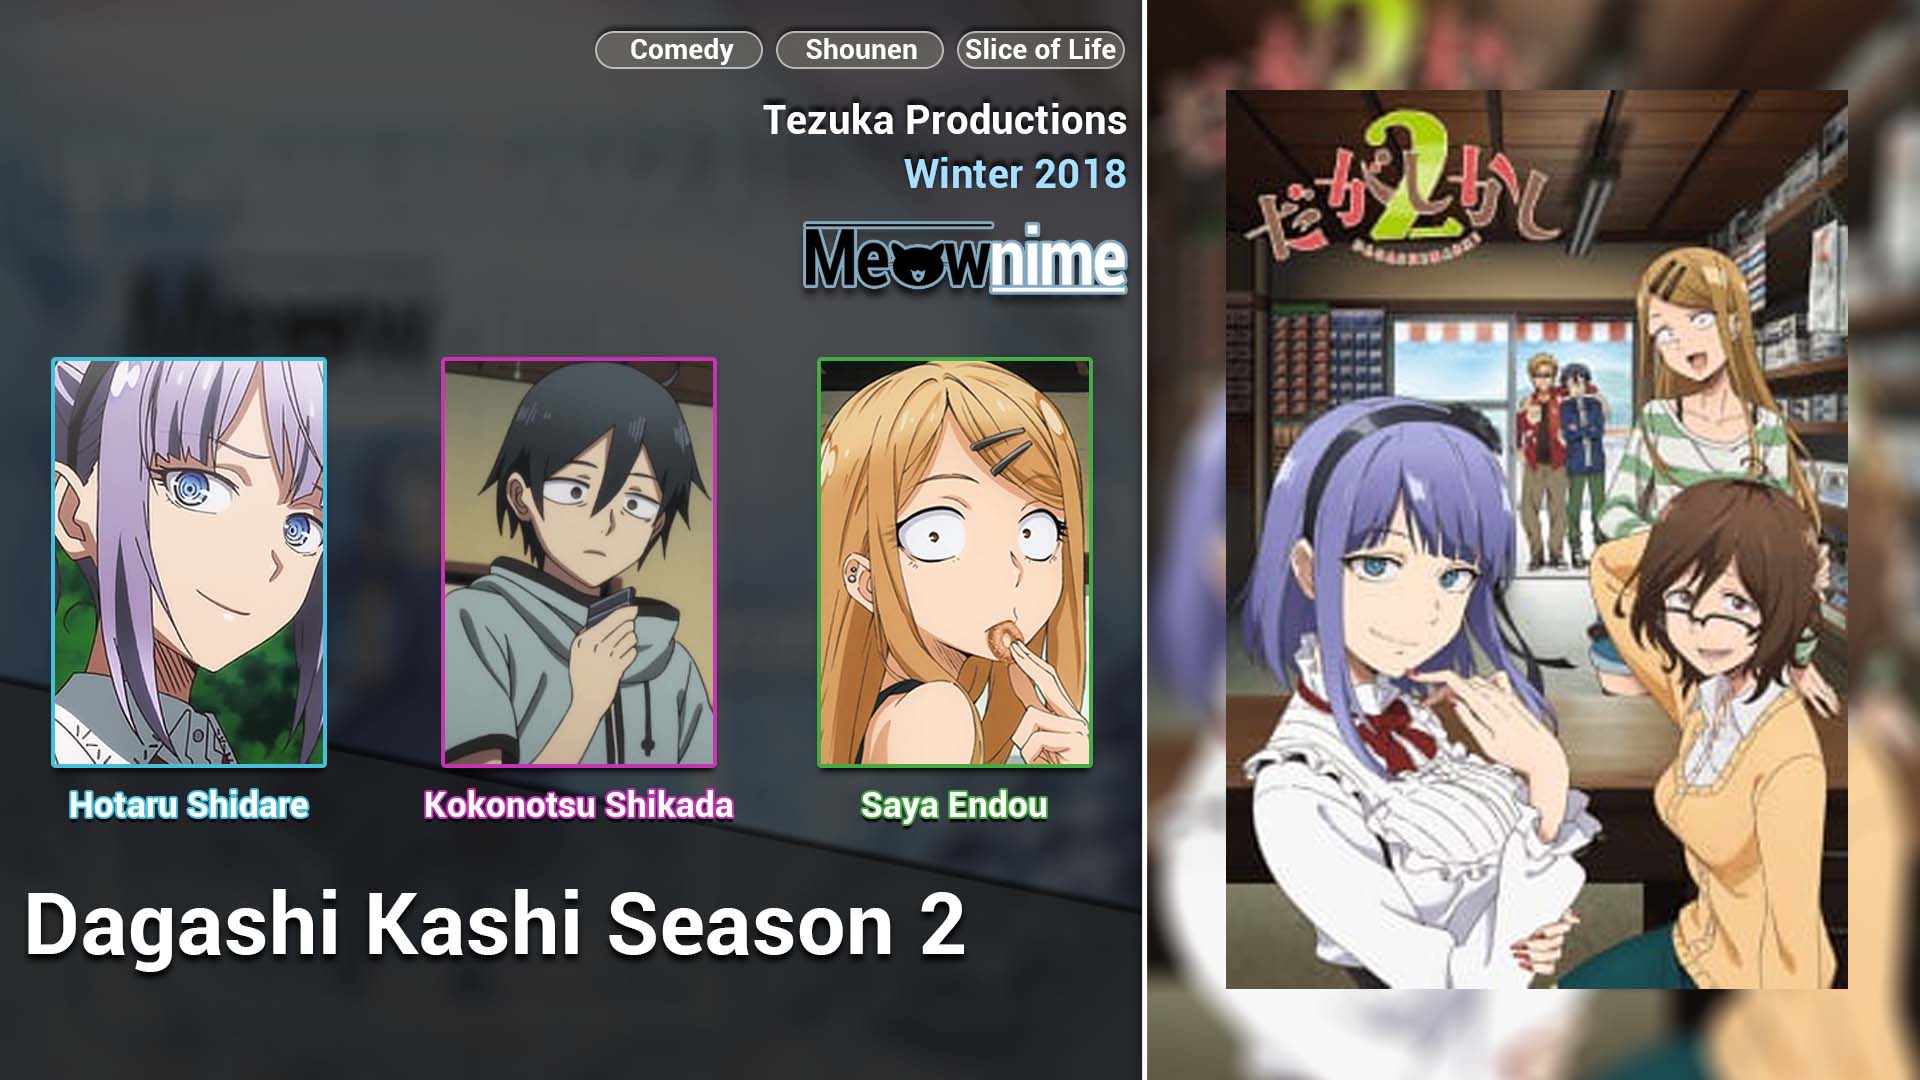 Dagashi kashi second season